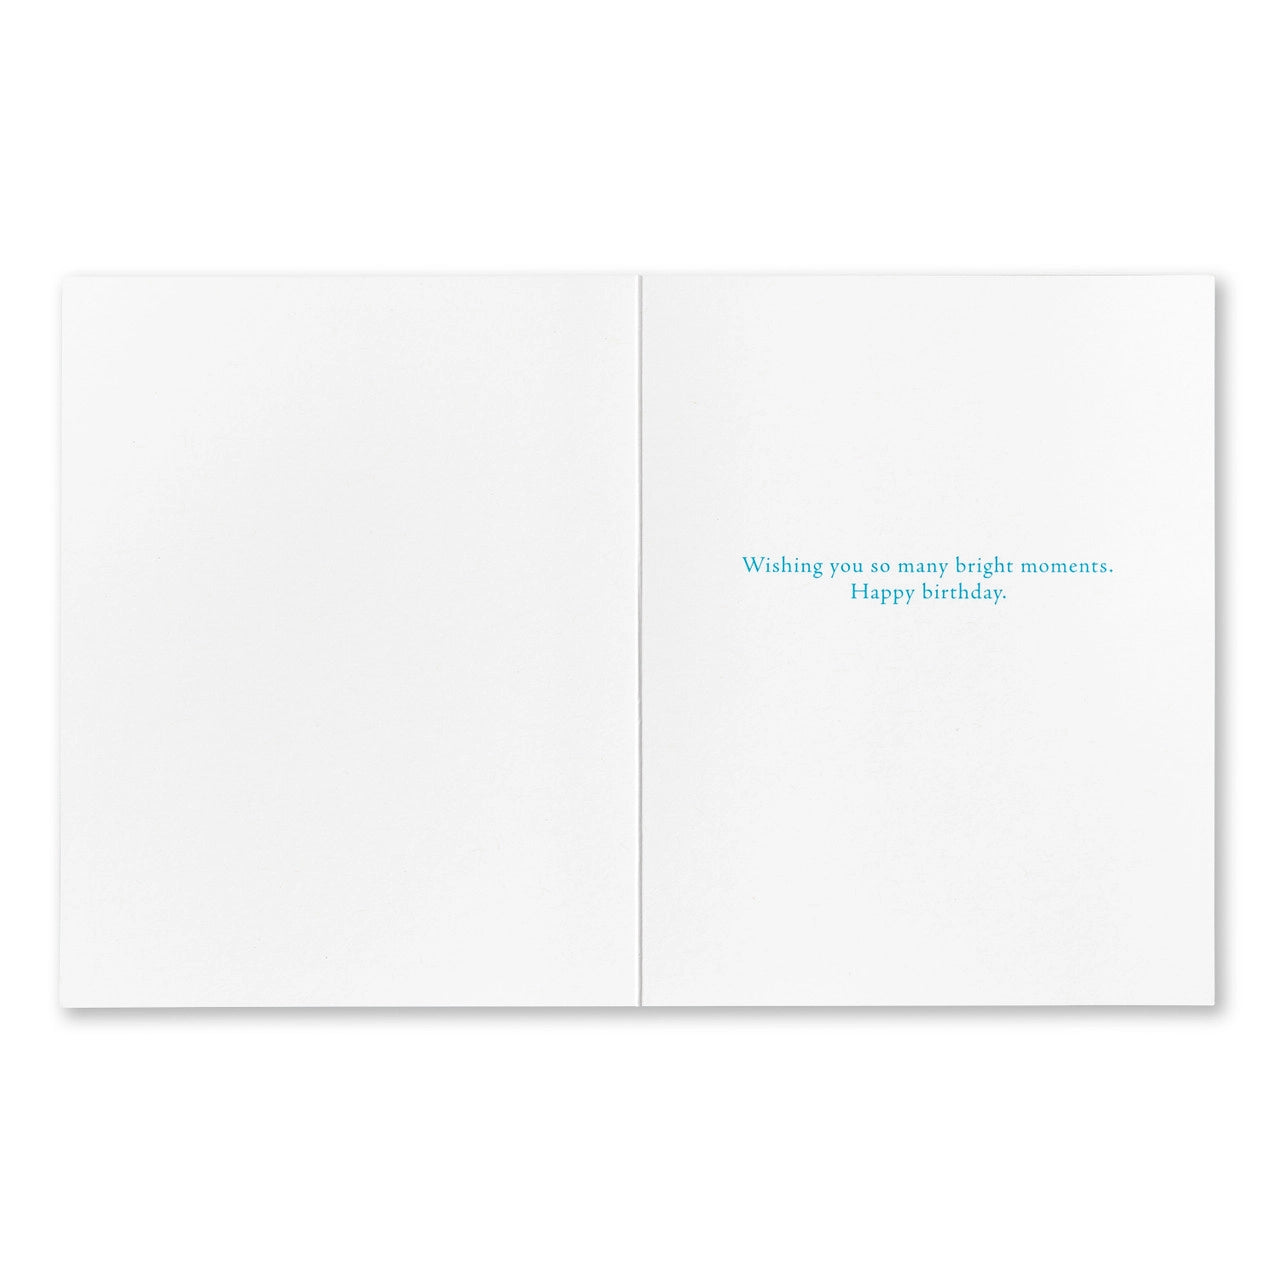 ...Hold Fast To Joy. -May Sarton - Birthday Greeting Card - Mellow Monkey